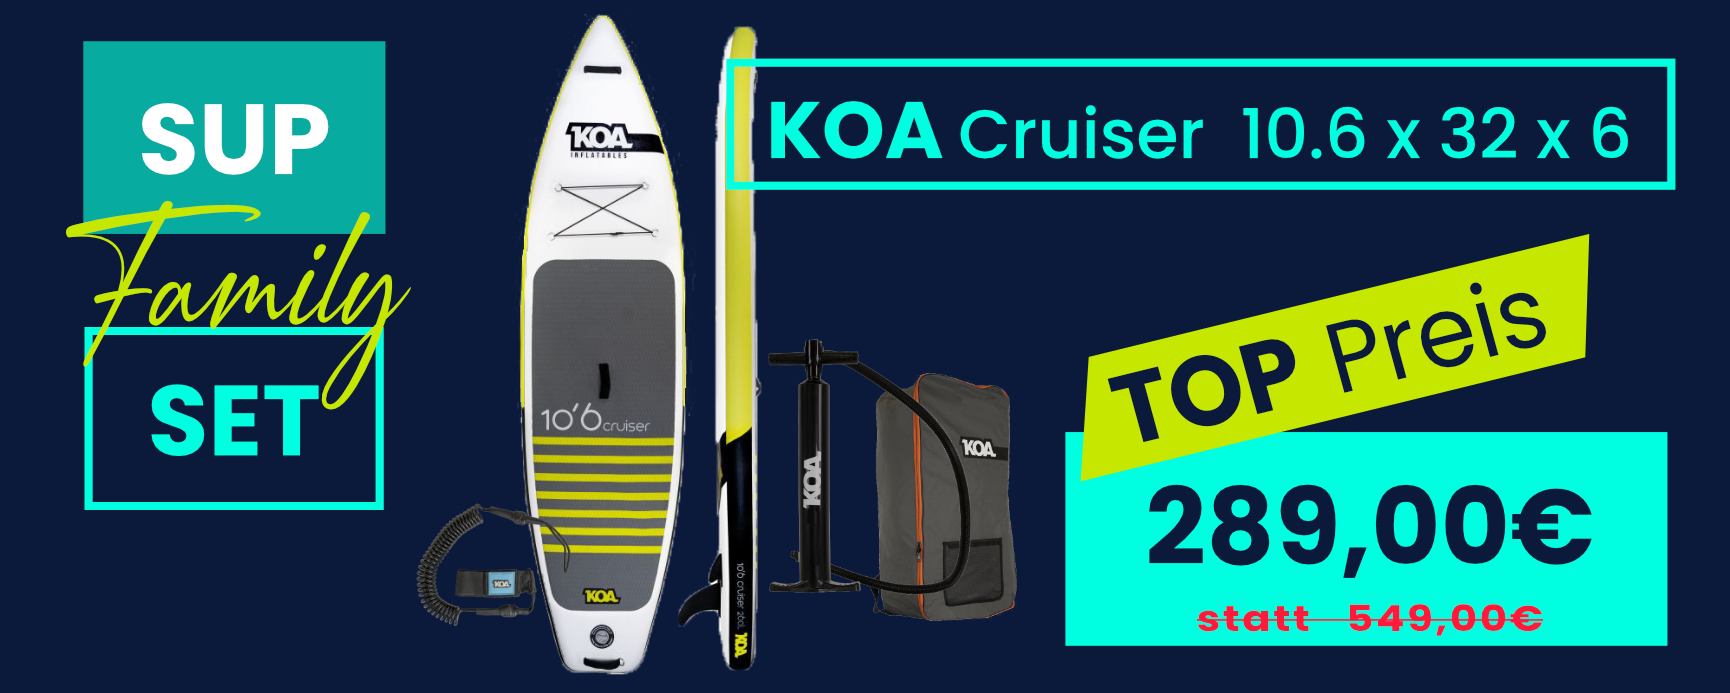 KOA Cruiser Touring SUP - Summer SALE